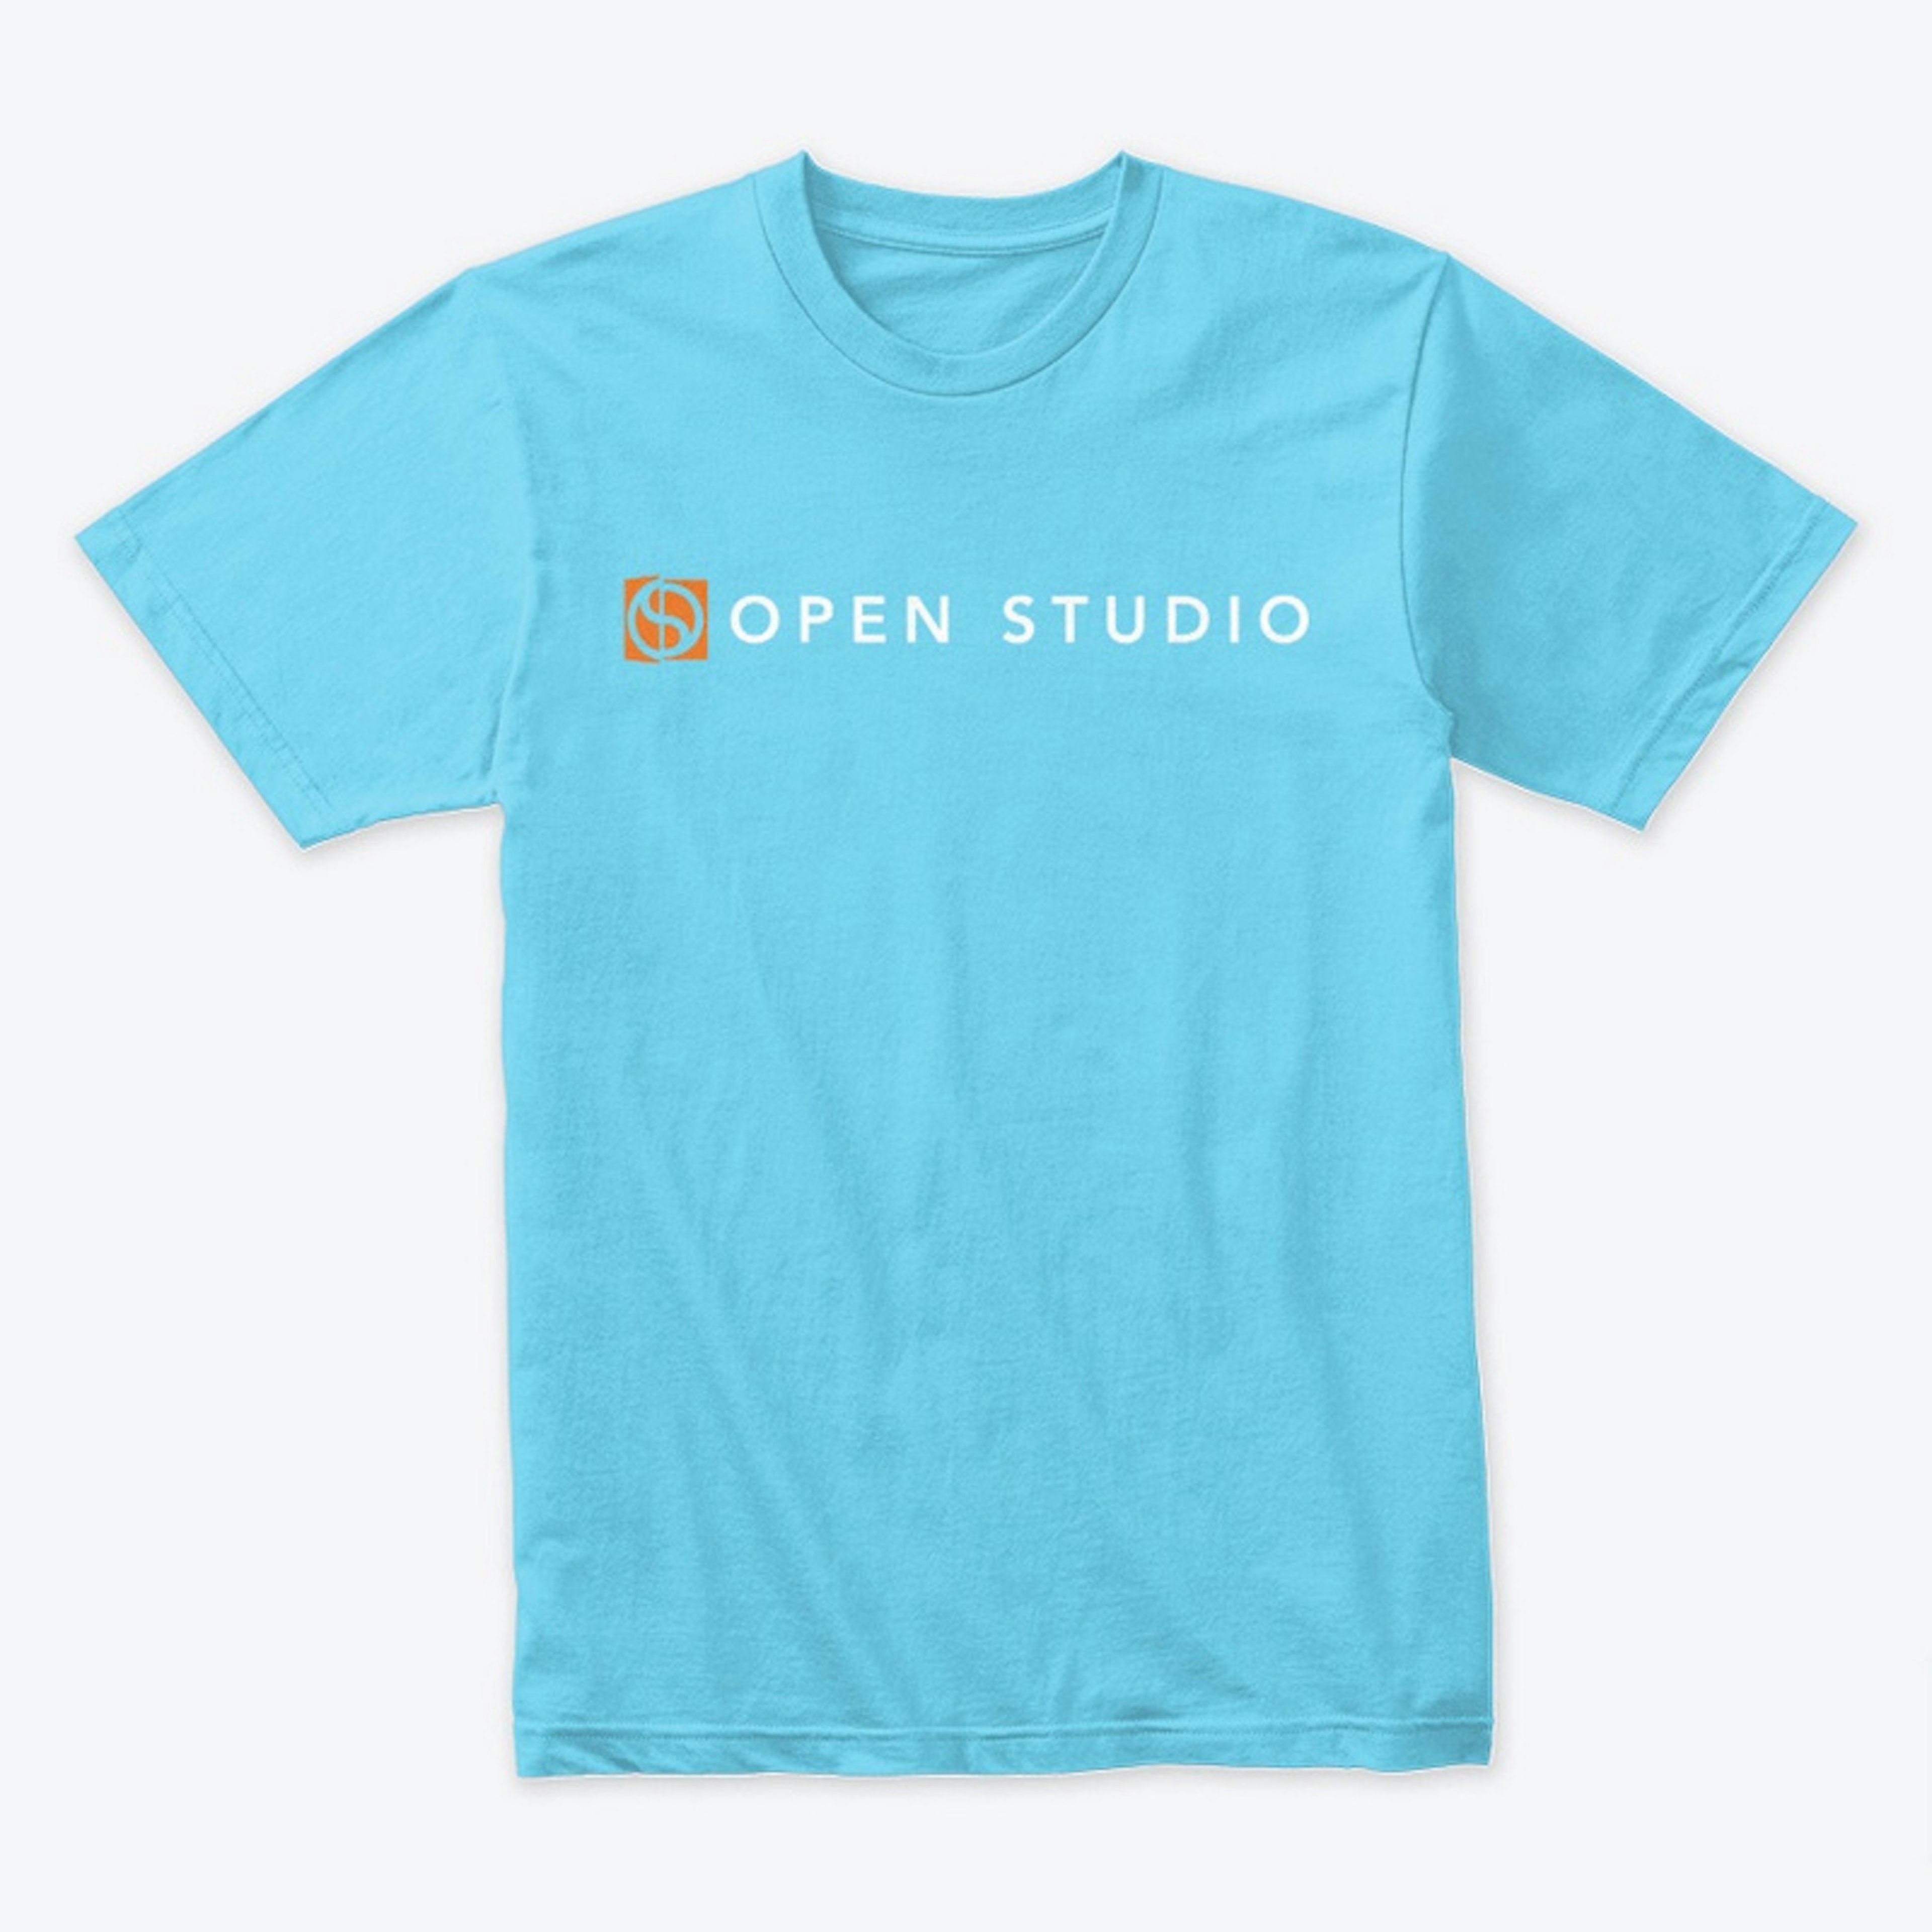 The "Original" Open Studio Shirt